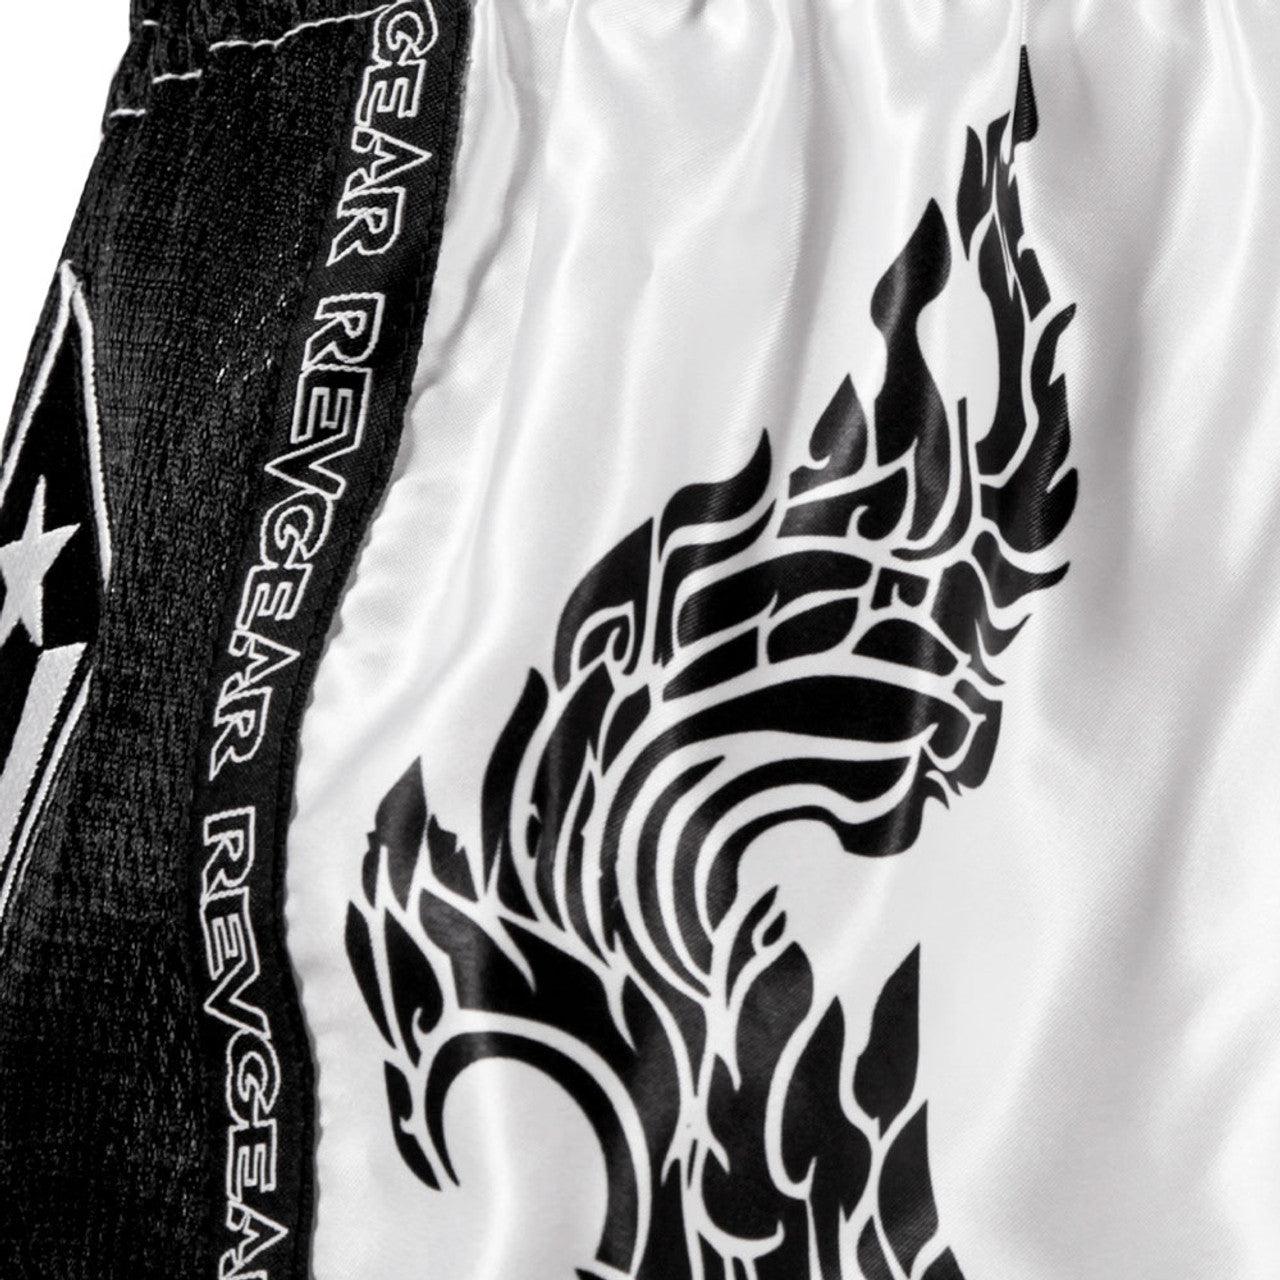 Legends Thai Shorts - Valhalla - White / Black - Violent Art Shop